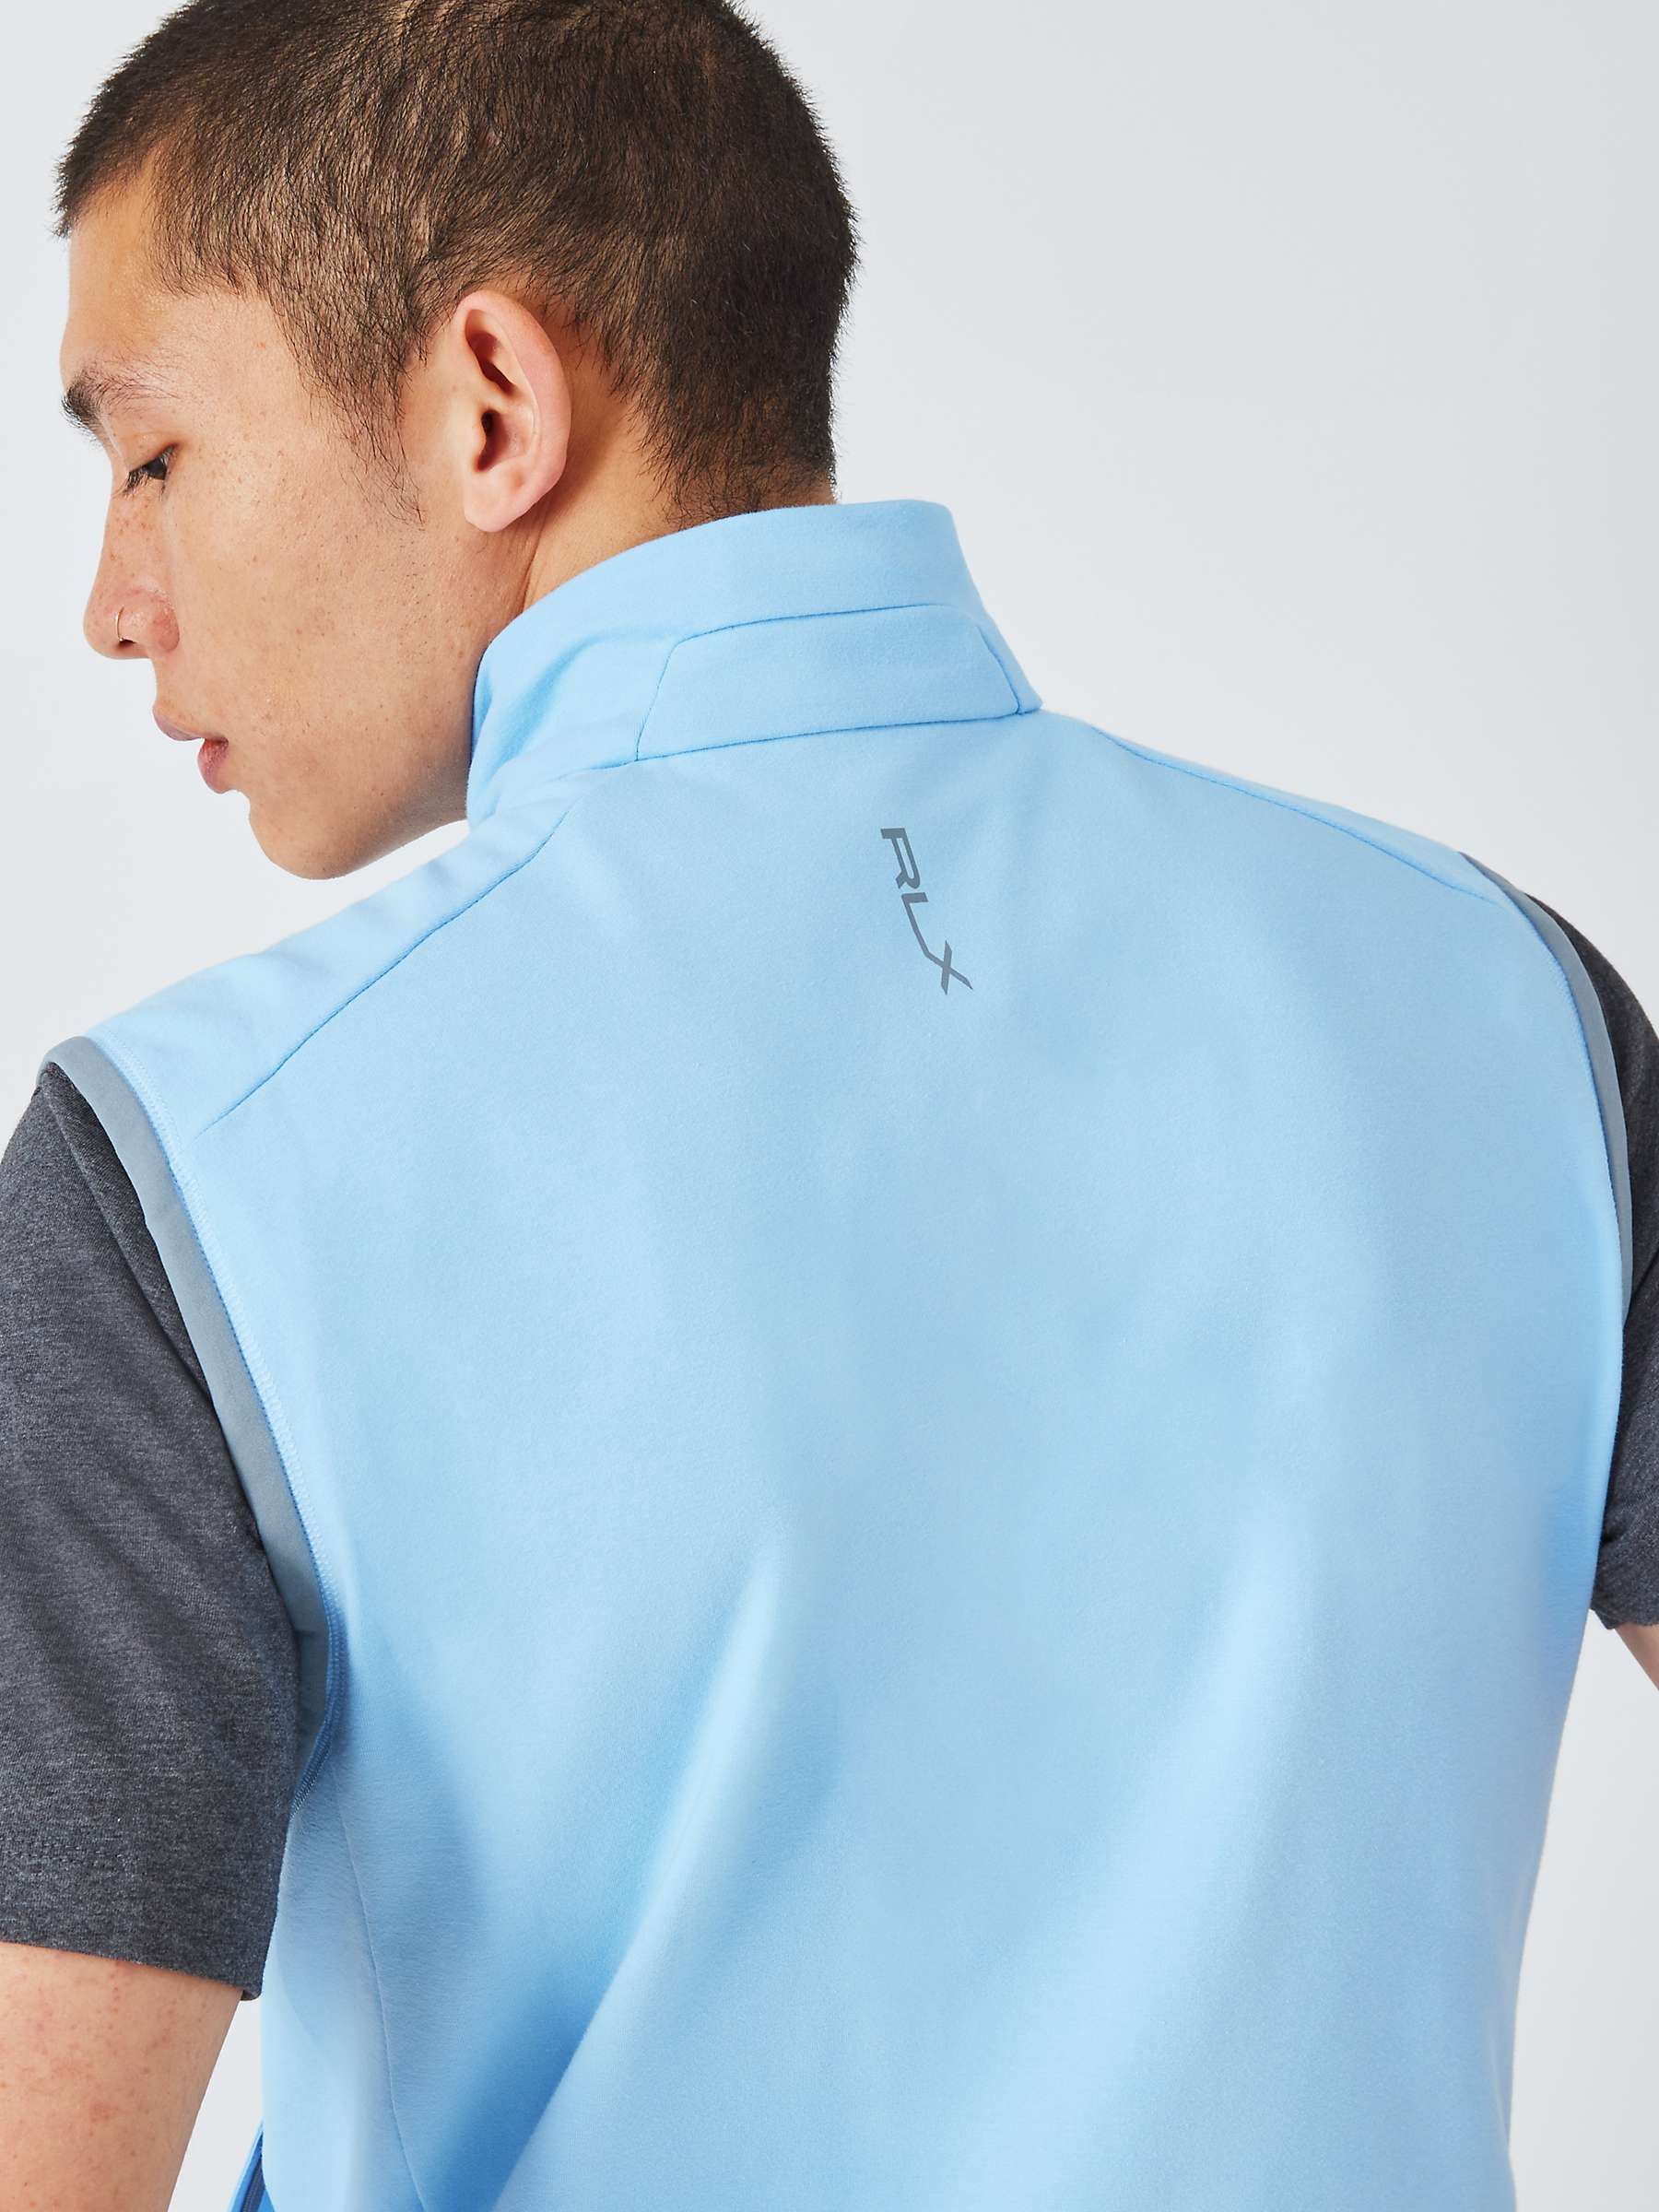 Buy Polo Golf Ralph Lauren Hybrid Full Zip Vest Jacket Online at johnlewis.com